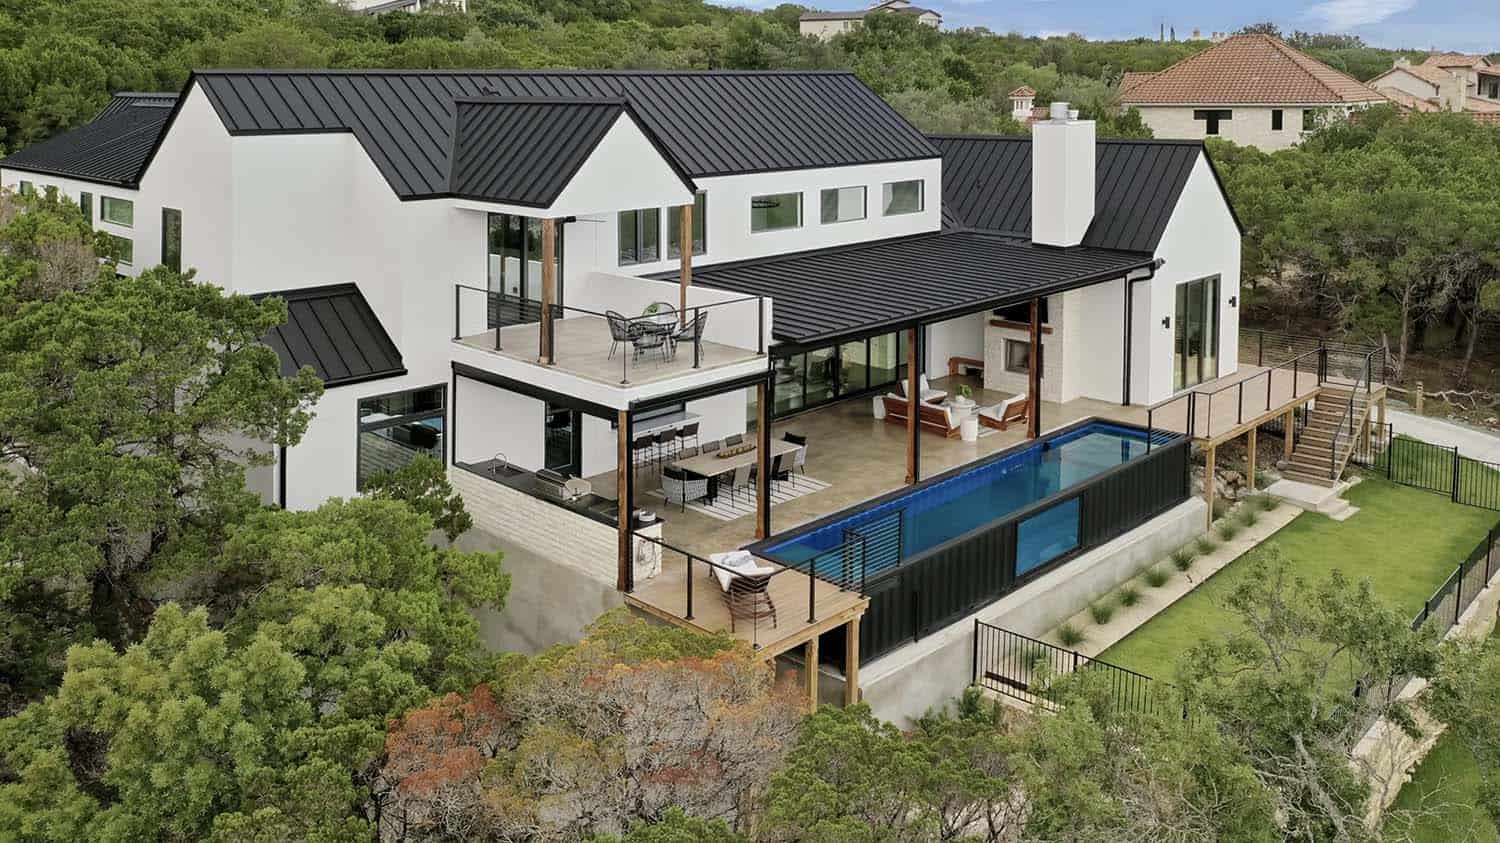 modern-scandinavian-farmhouse-exterior-with-a-pool